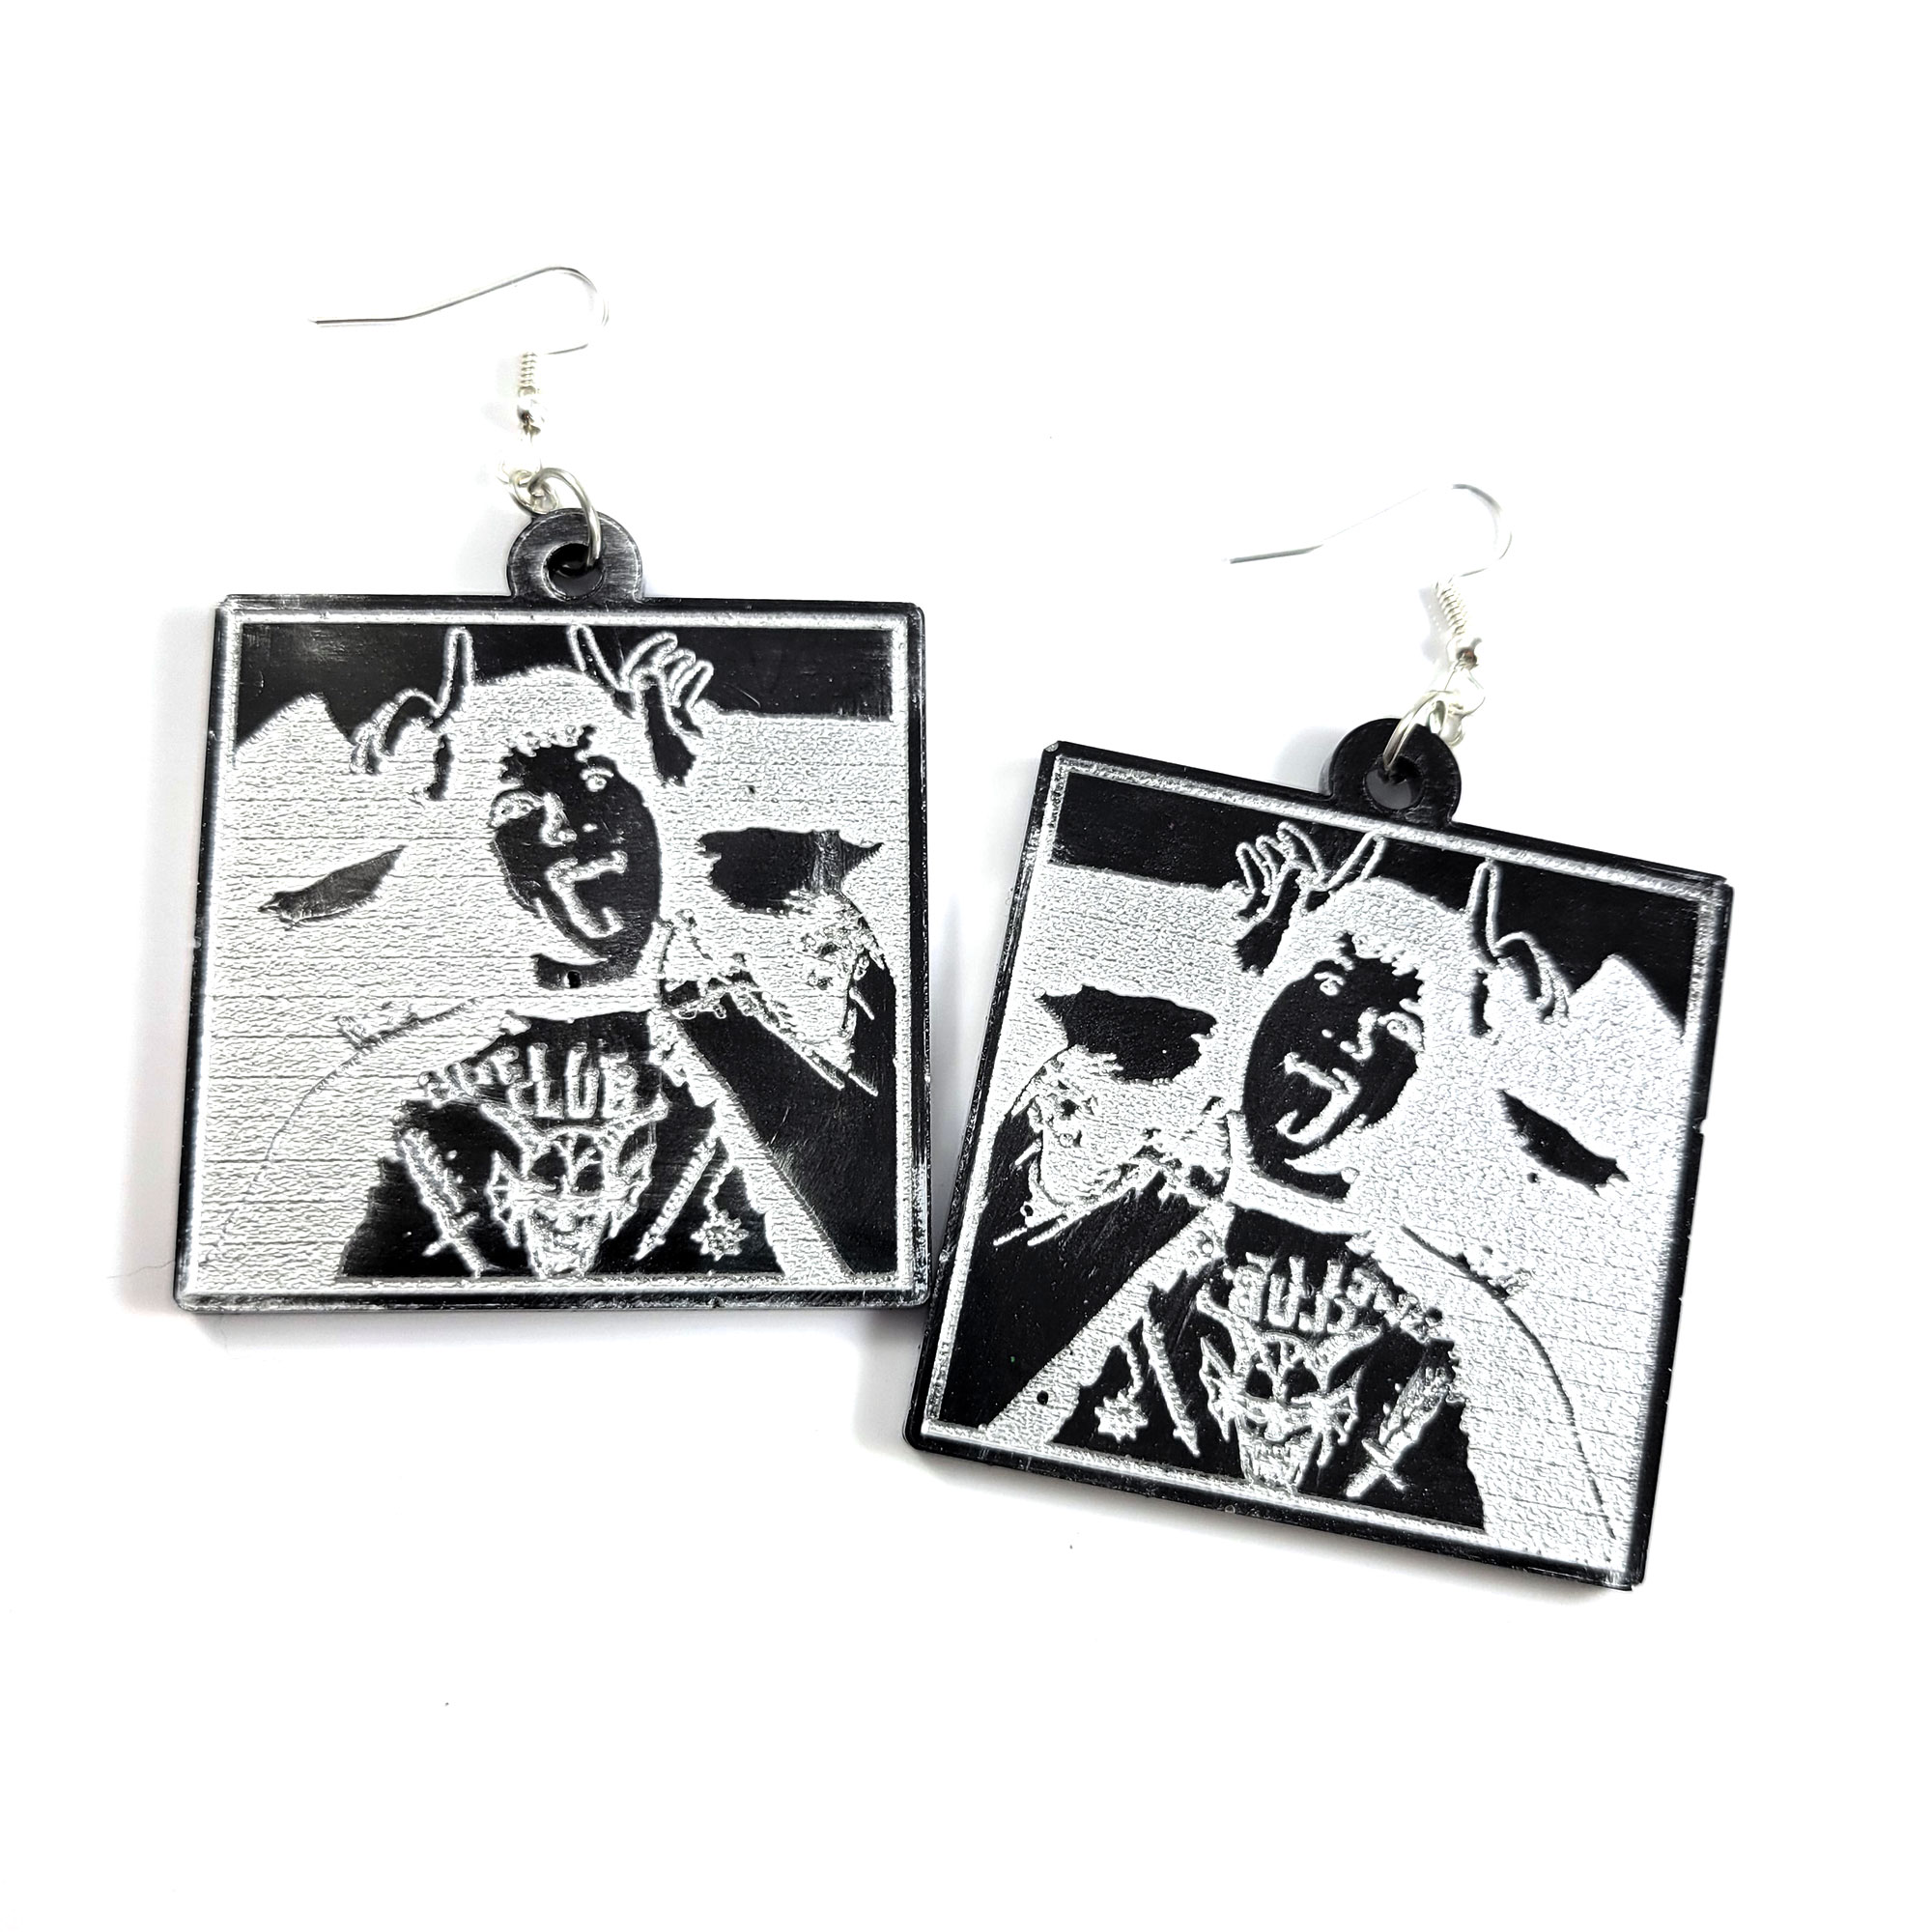 Black & Silver Dungeonmaster Earrings by Wilde Designs